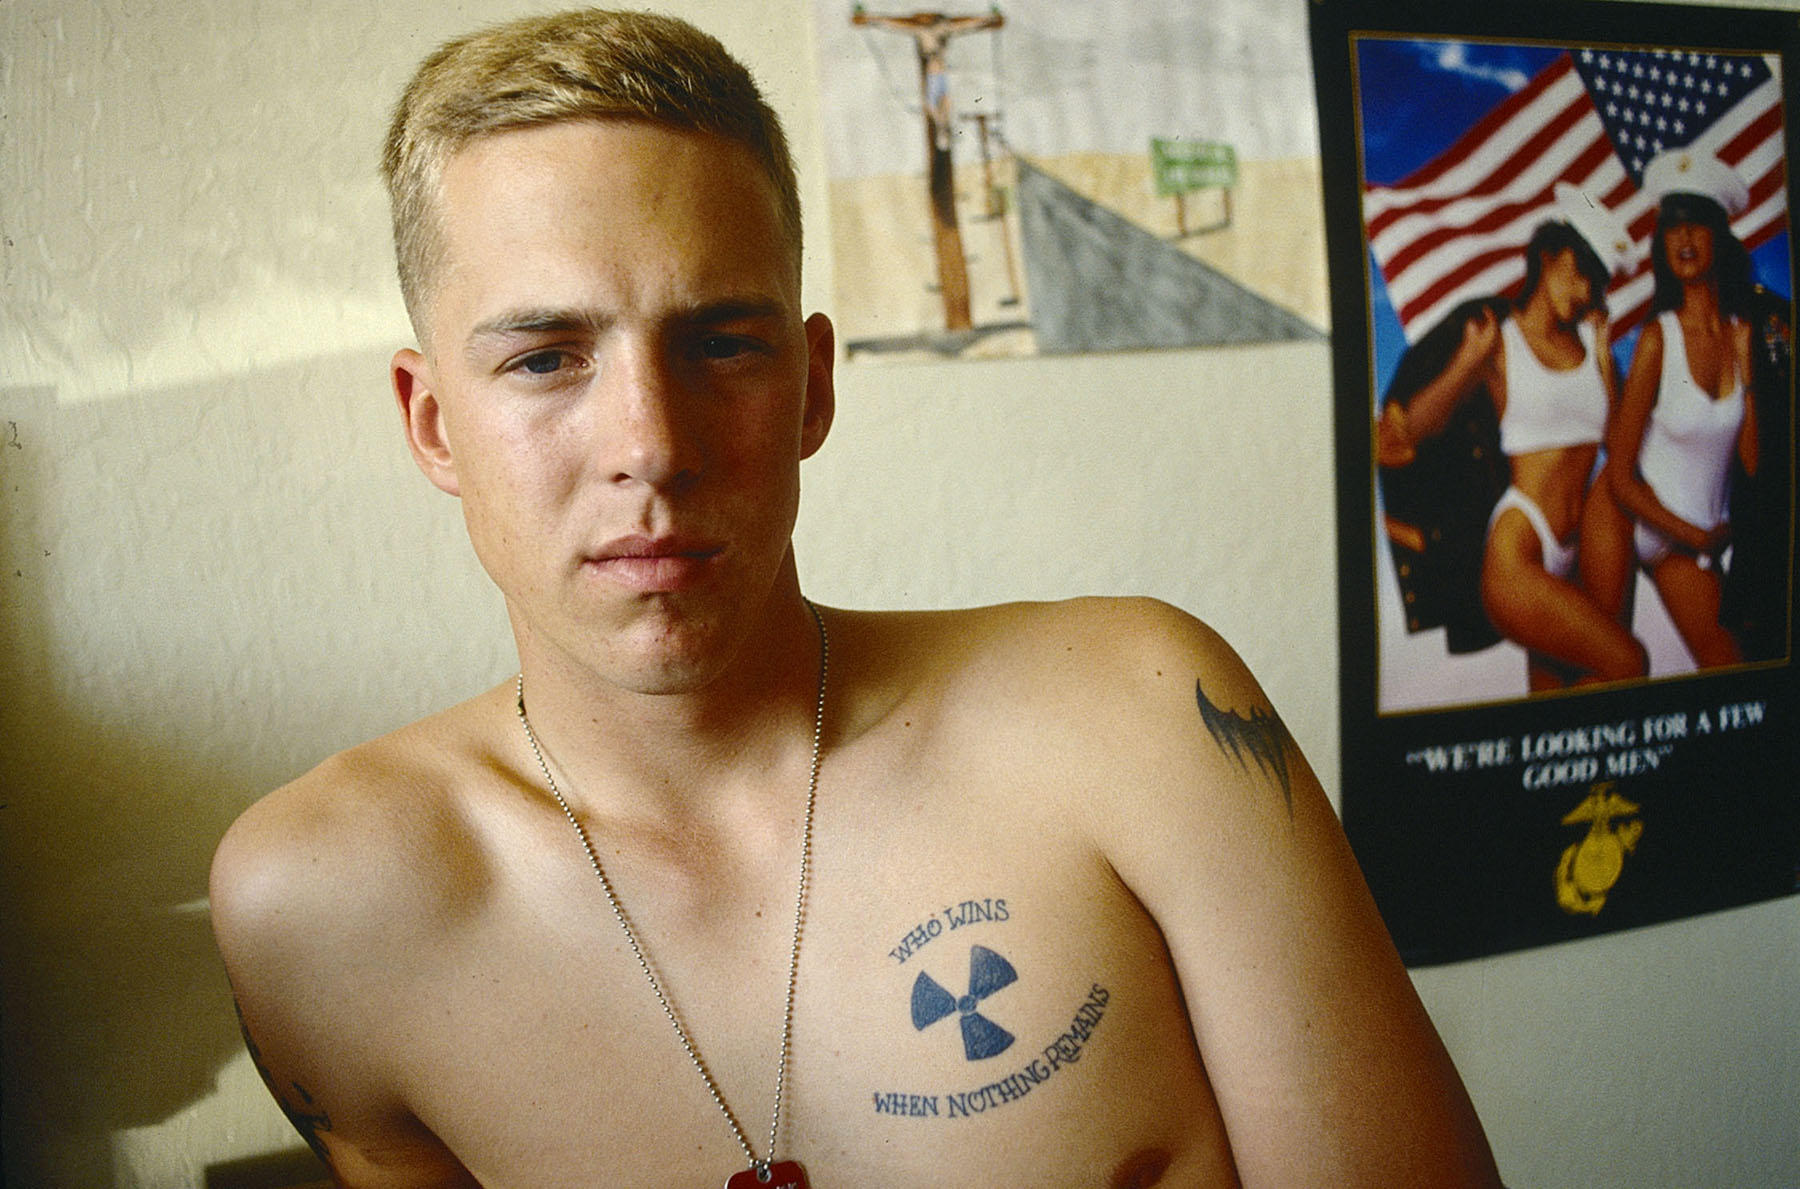 Camp Pendleton, California:
Marine back from Iraq war.